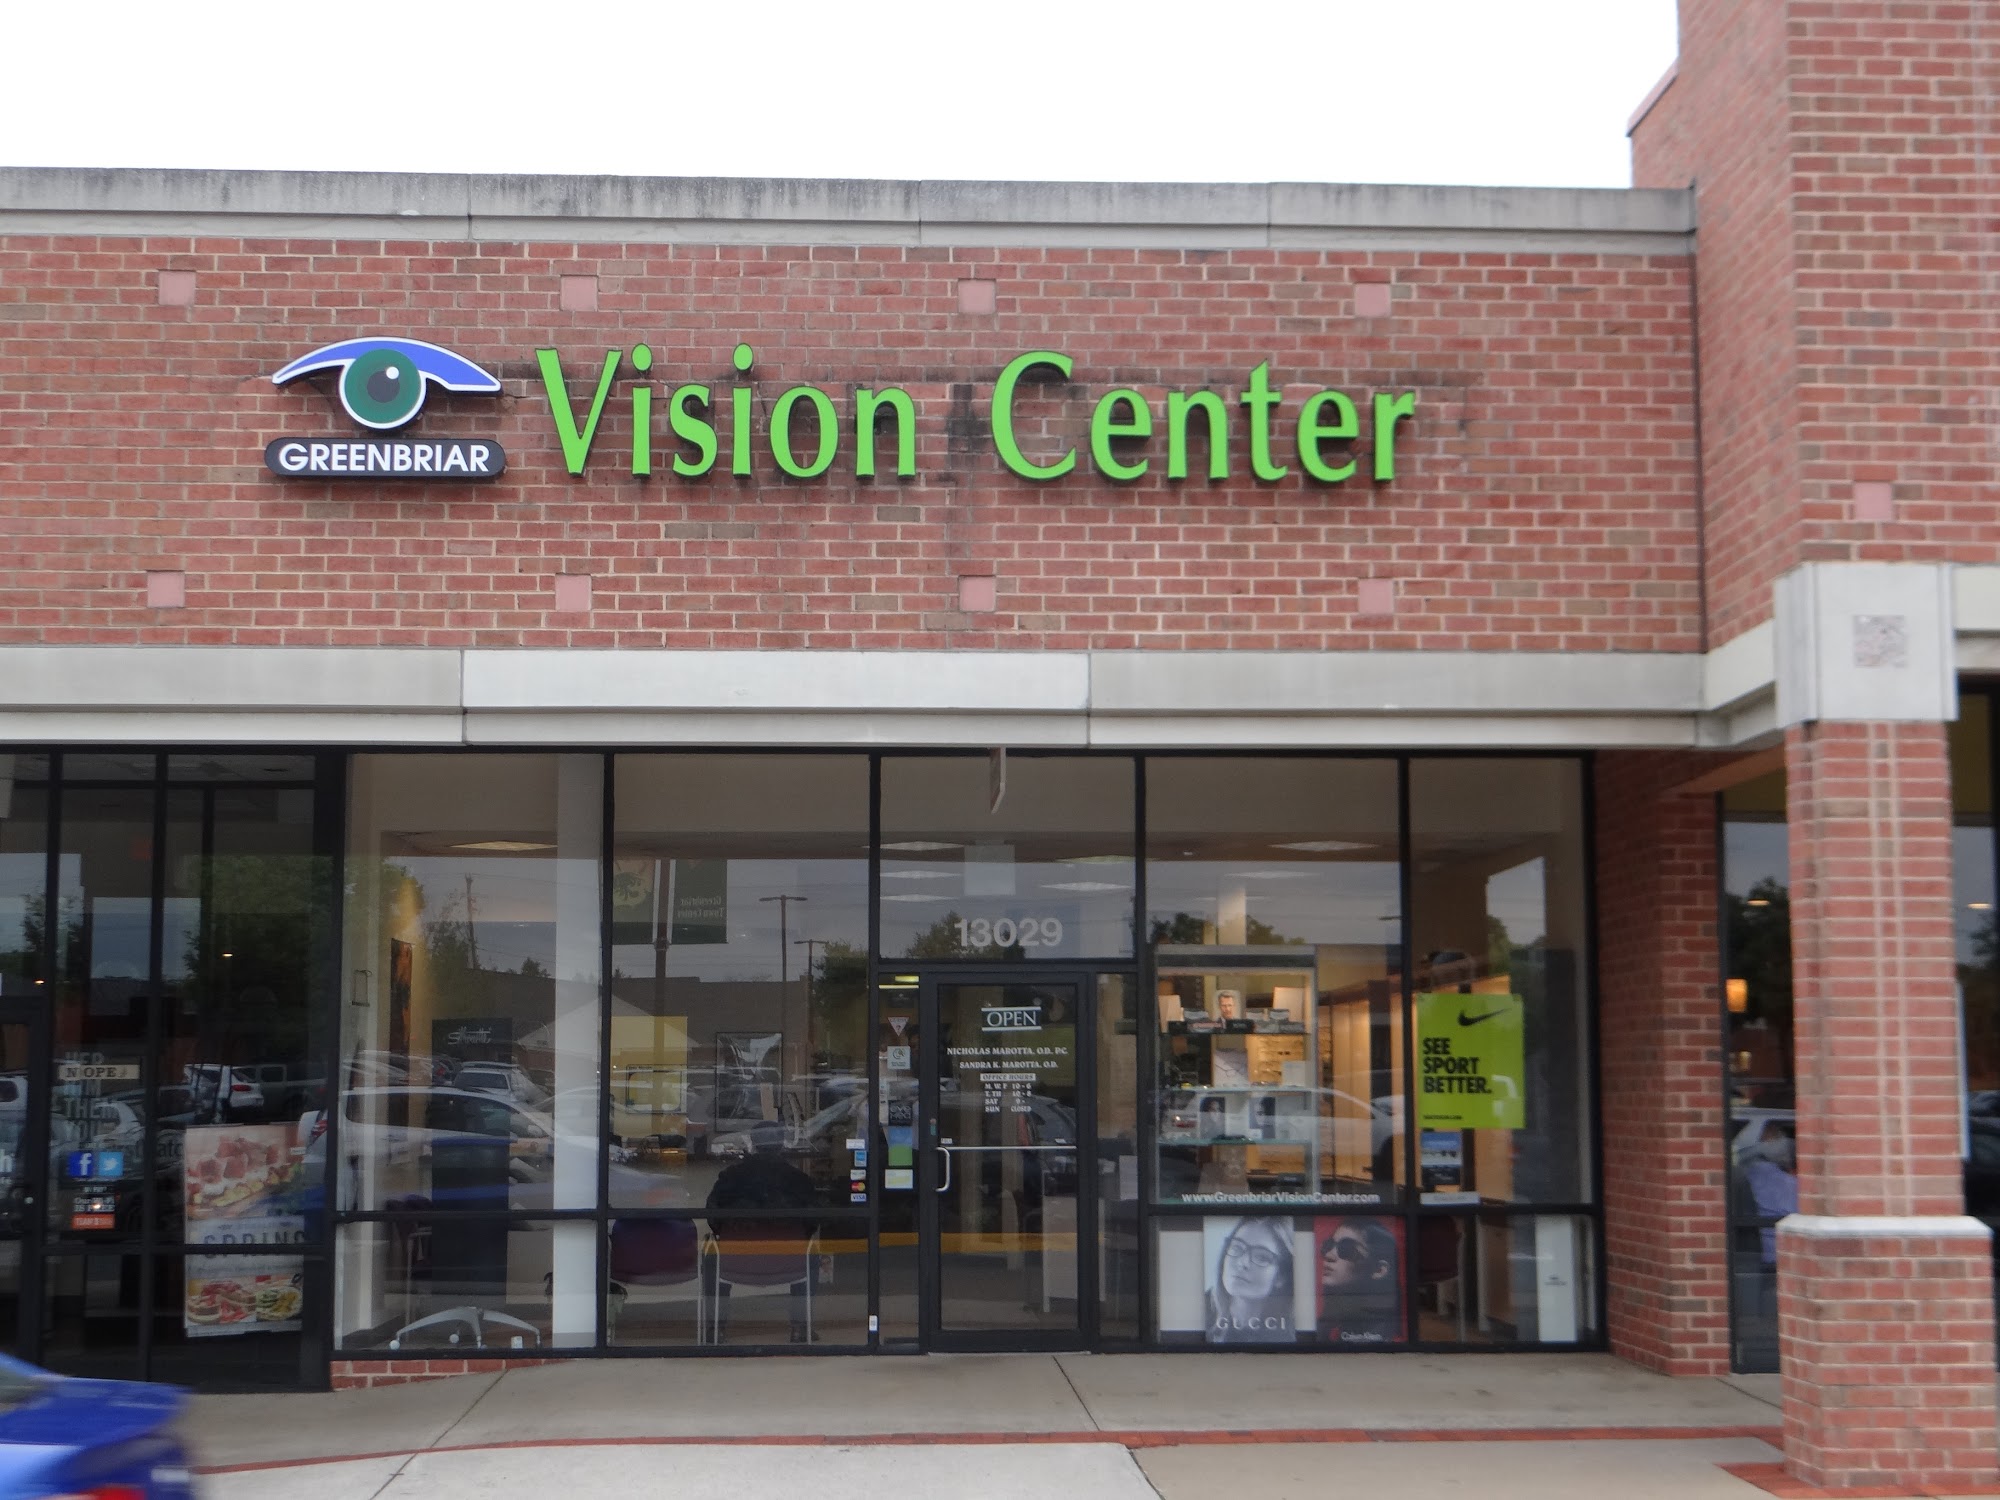 Greenbriar Vision Center